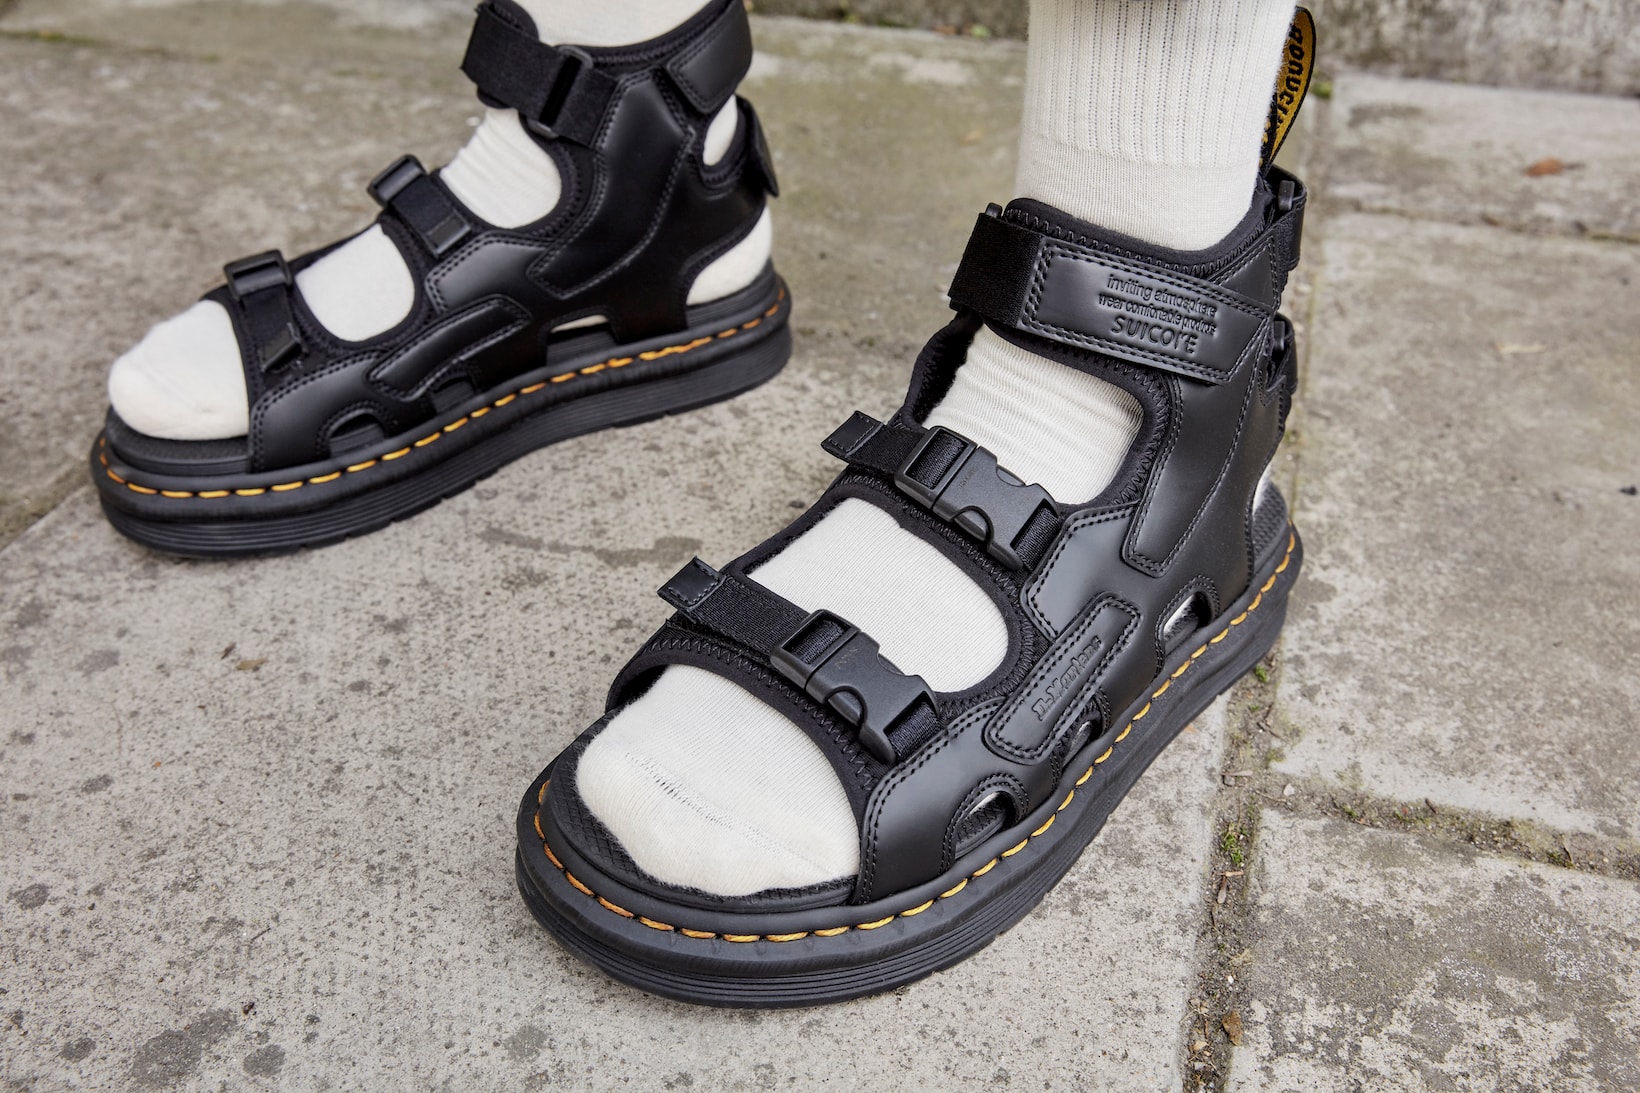 dr martens suicoke sandals collaboration lorsan depa boak black on foot socks